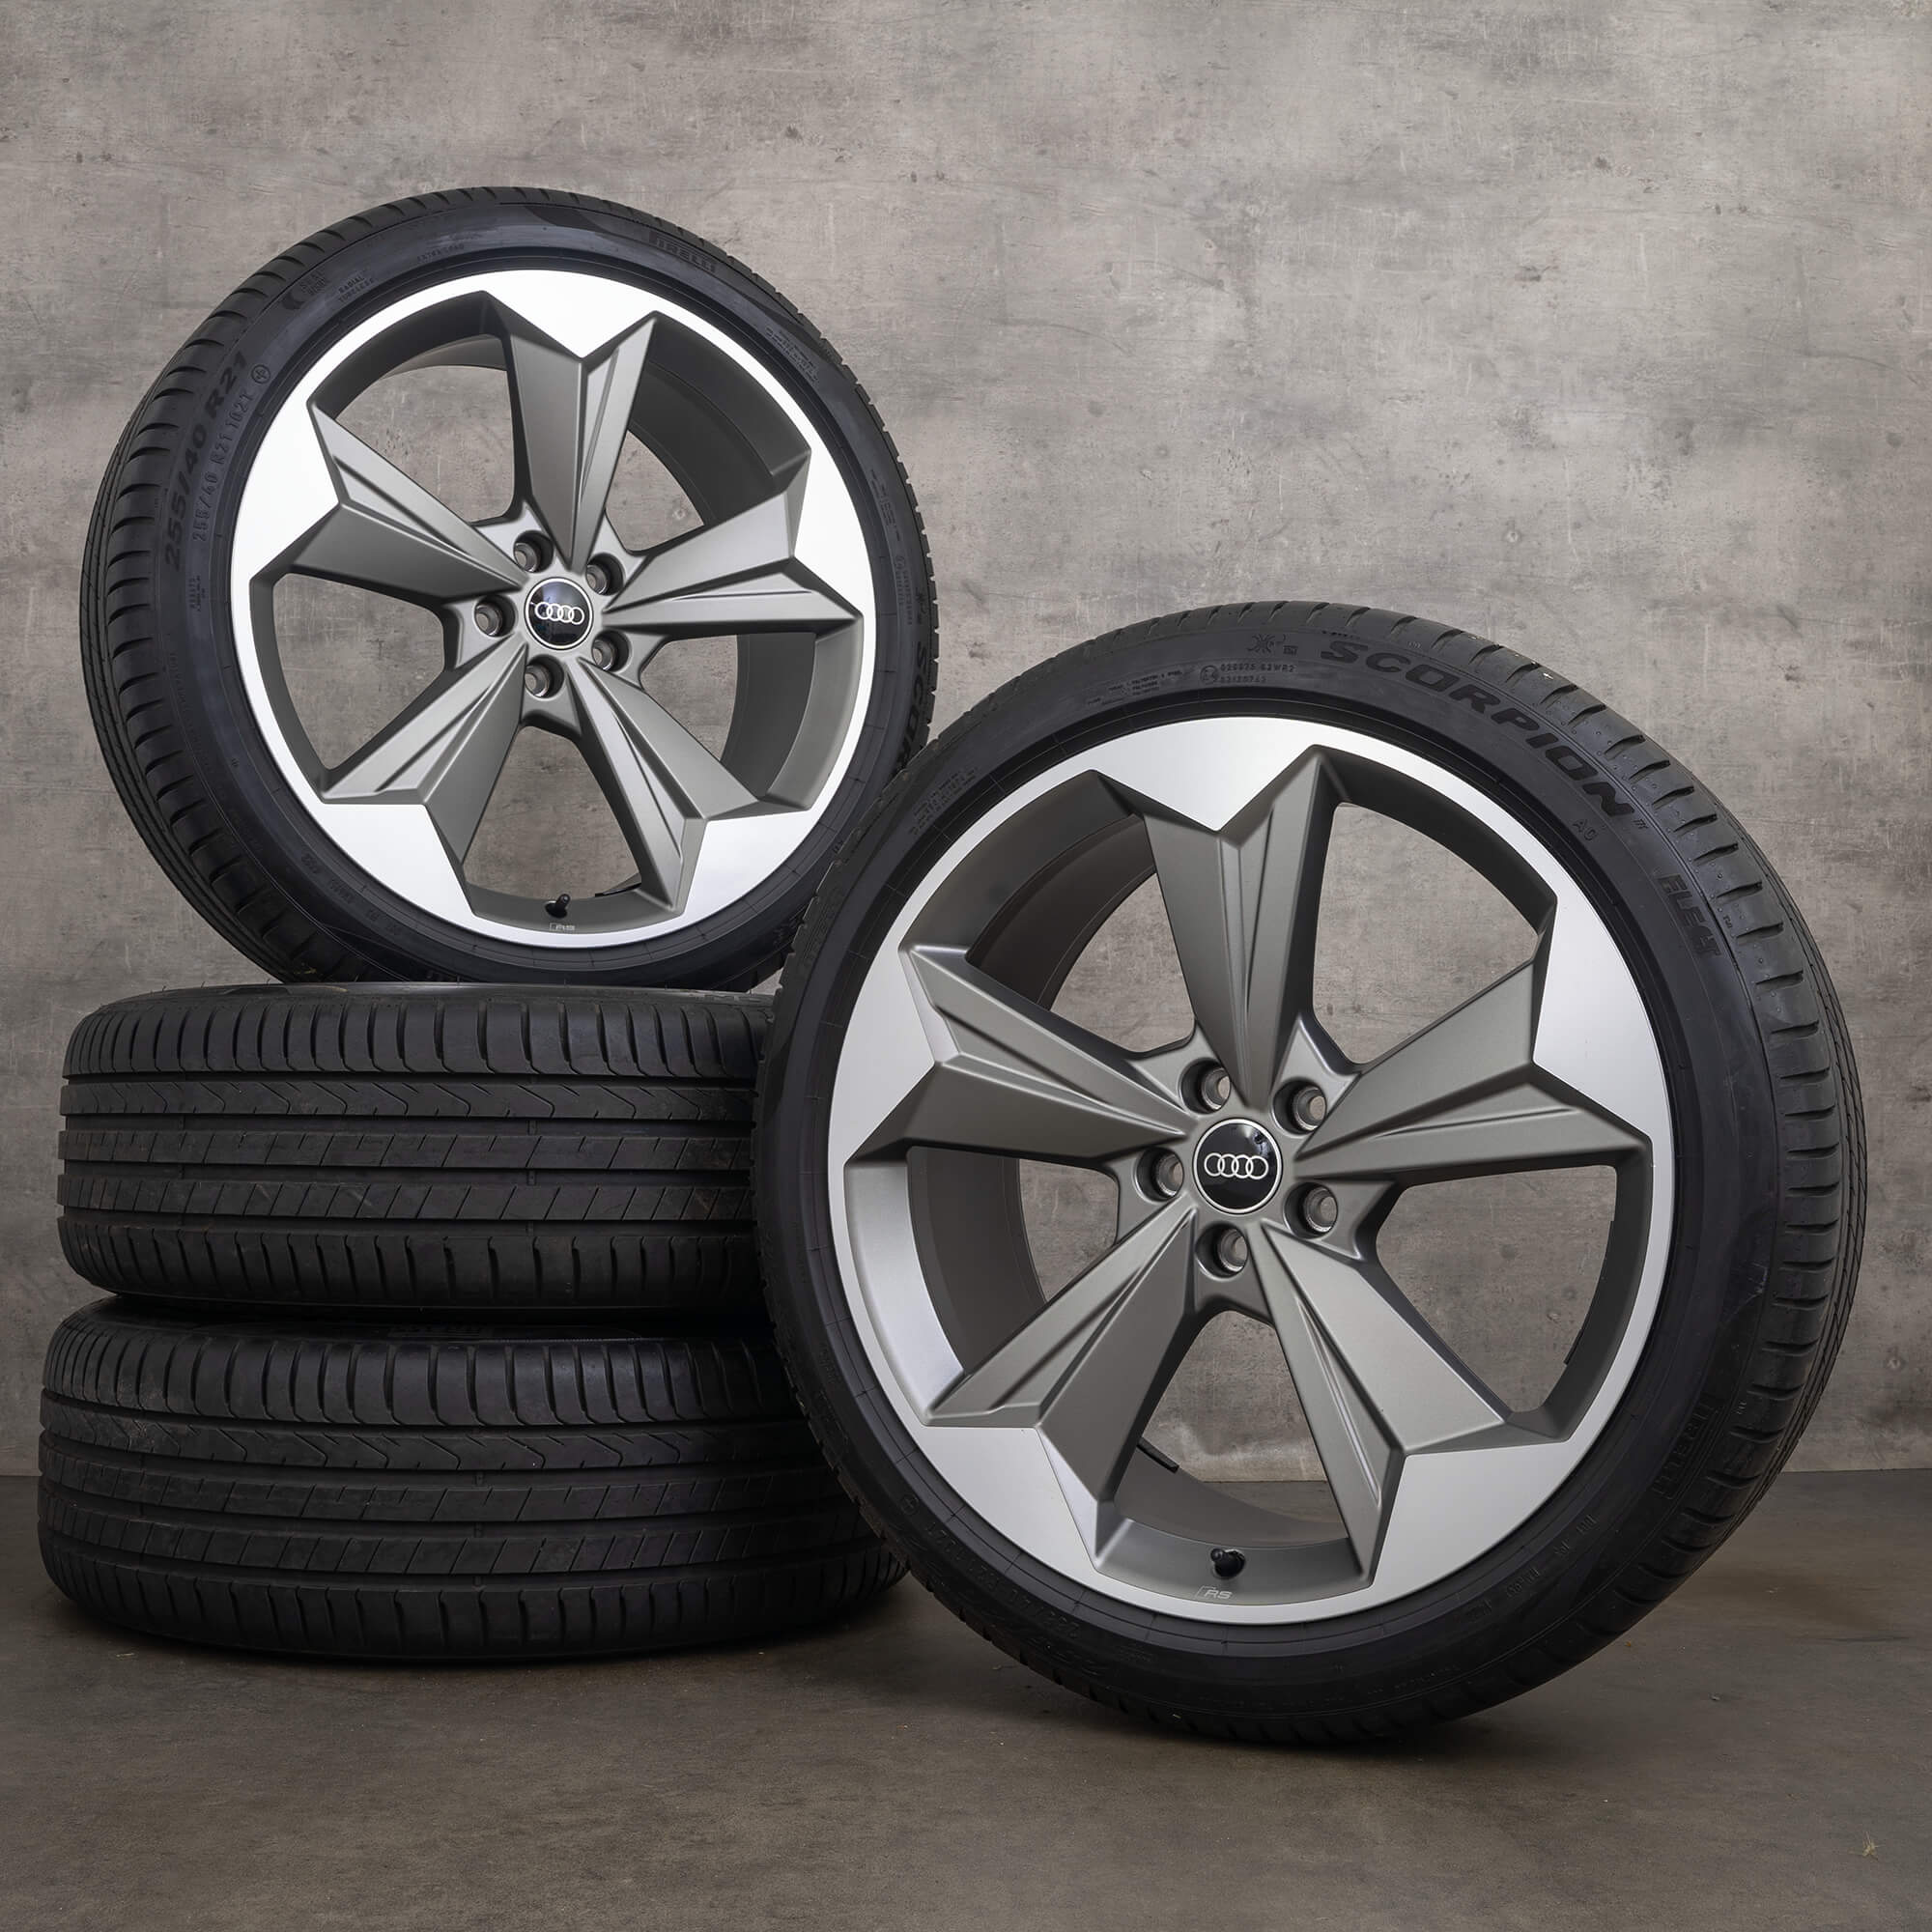 Audi Q4 & Sportback SUV jantes 21 pouces pneus été d'origine 89A601025 89A601025R Rotor Evo bronze mat